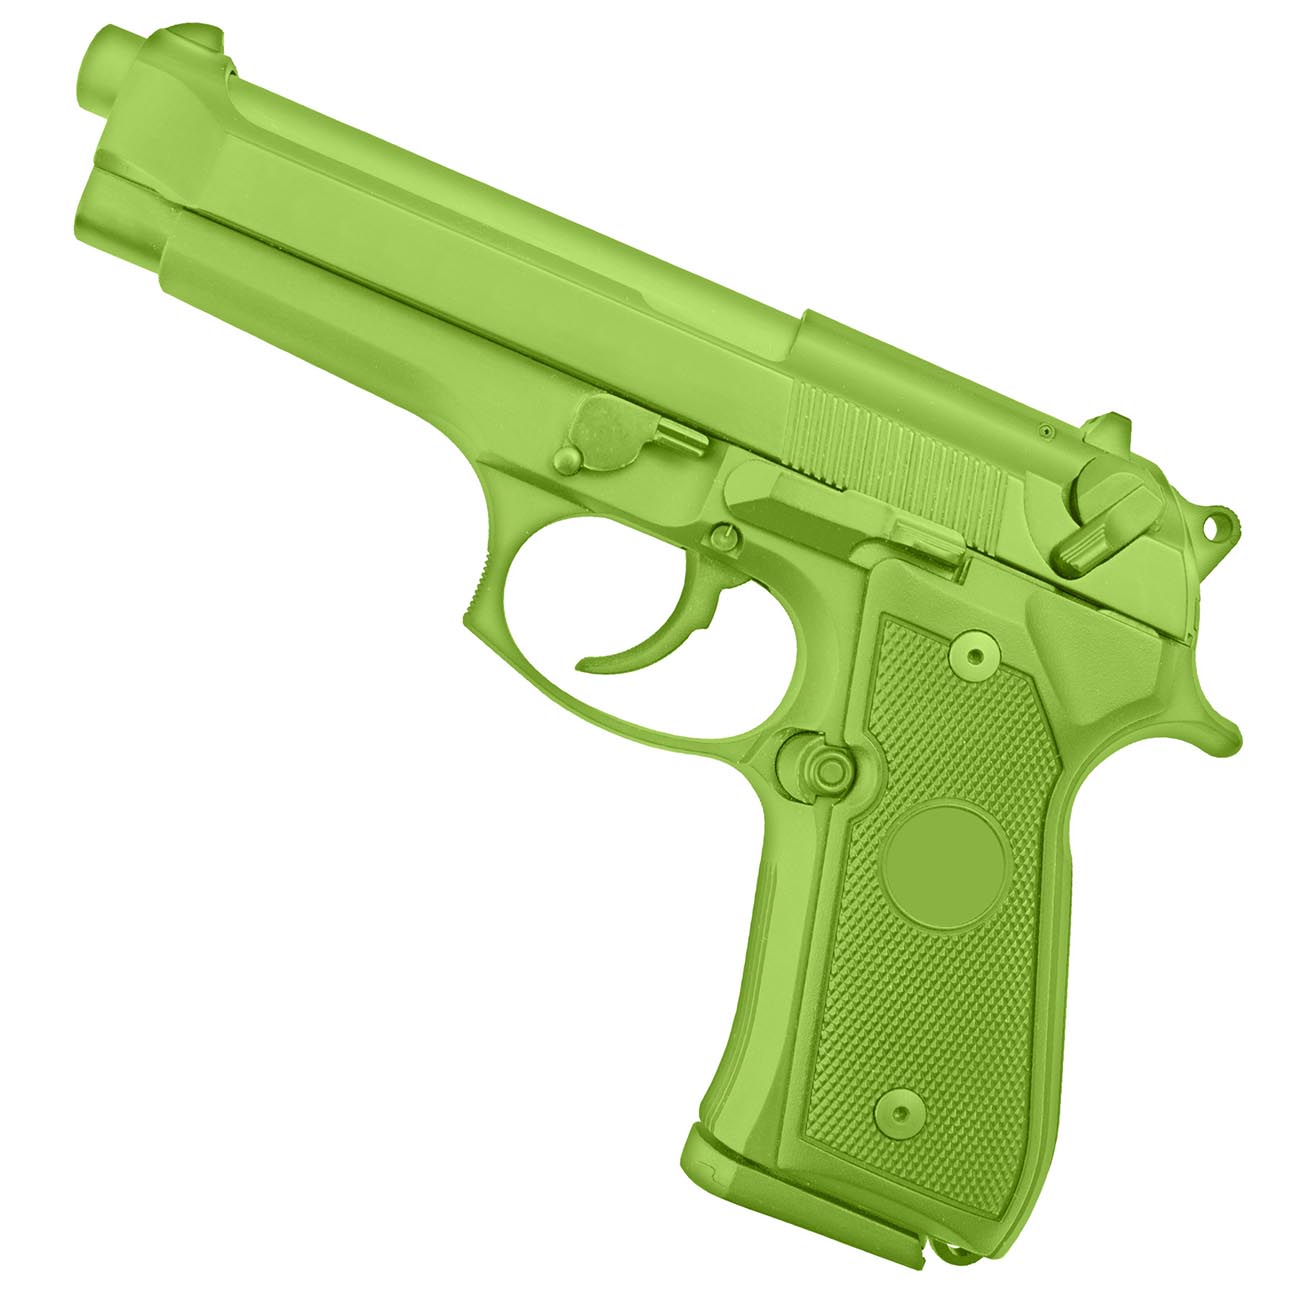 Cold Steel Model 92 Rubber Training Pistol (Green Colored Polypropylene)